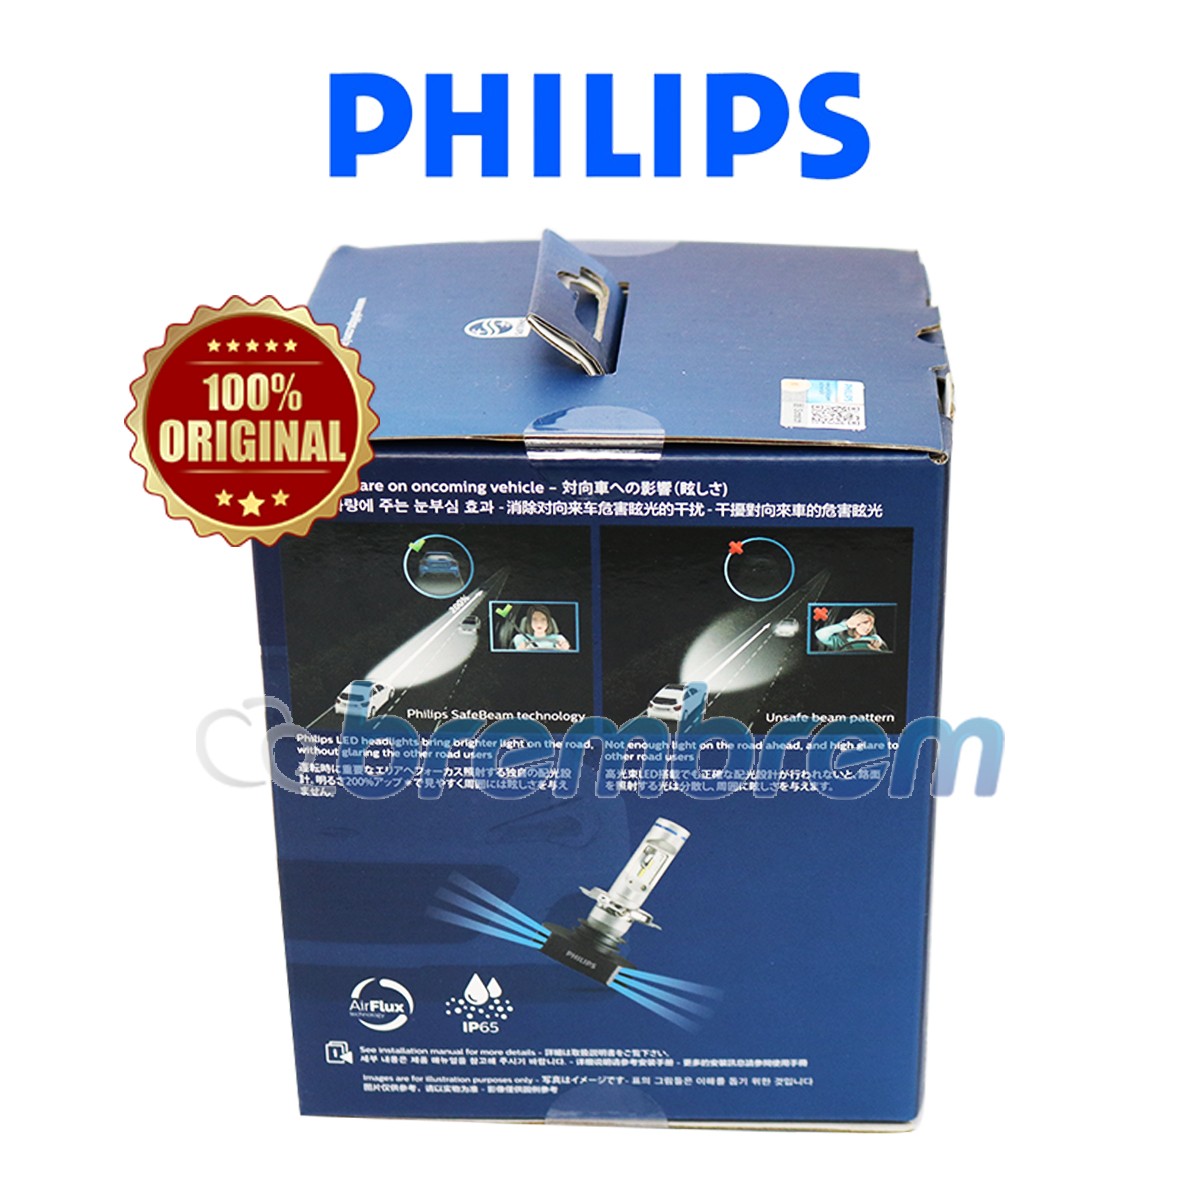 PHILIPS XTREME ULTINON H4 (6000K) - LAMPU LED